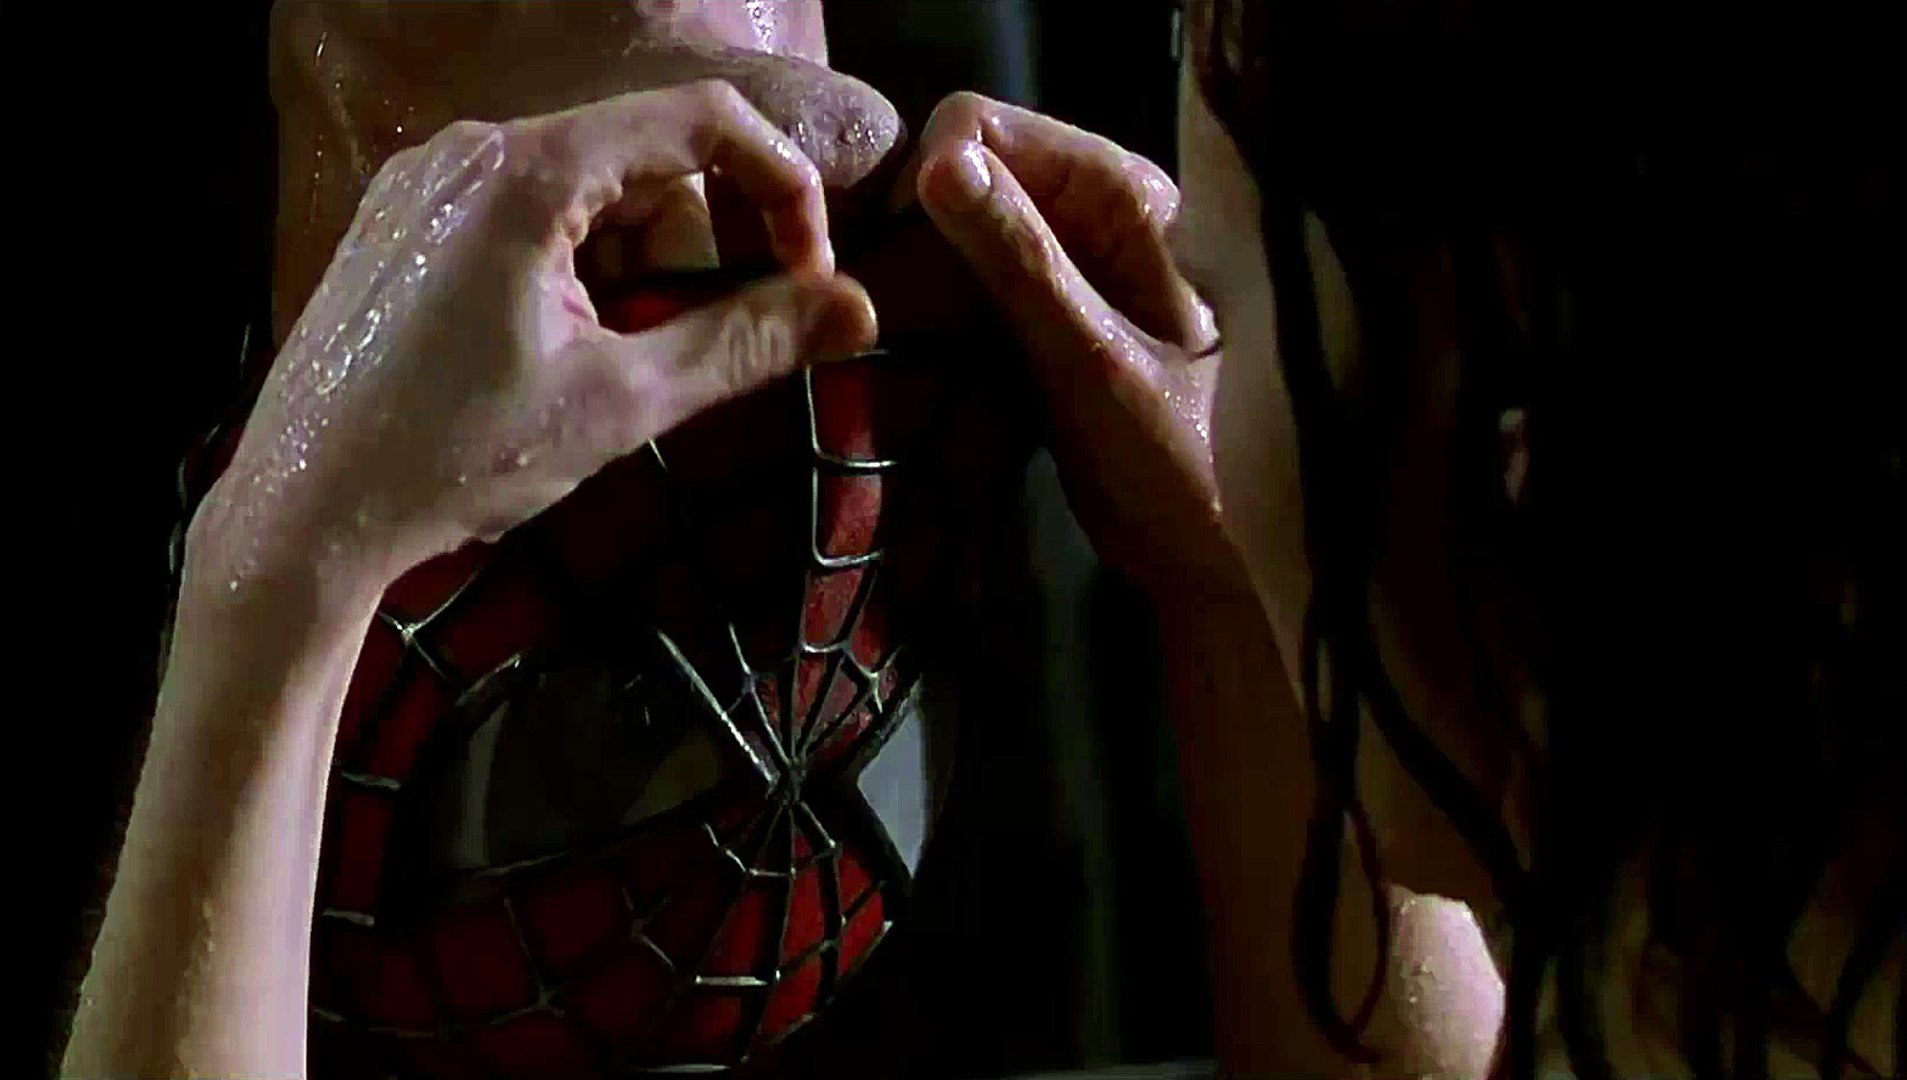 Sophie rain spiderman video 18. Поцелуй женщины-паука. Ним и вен поцелуй.